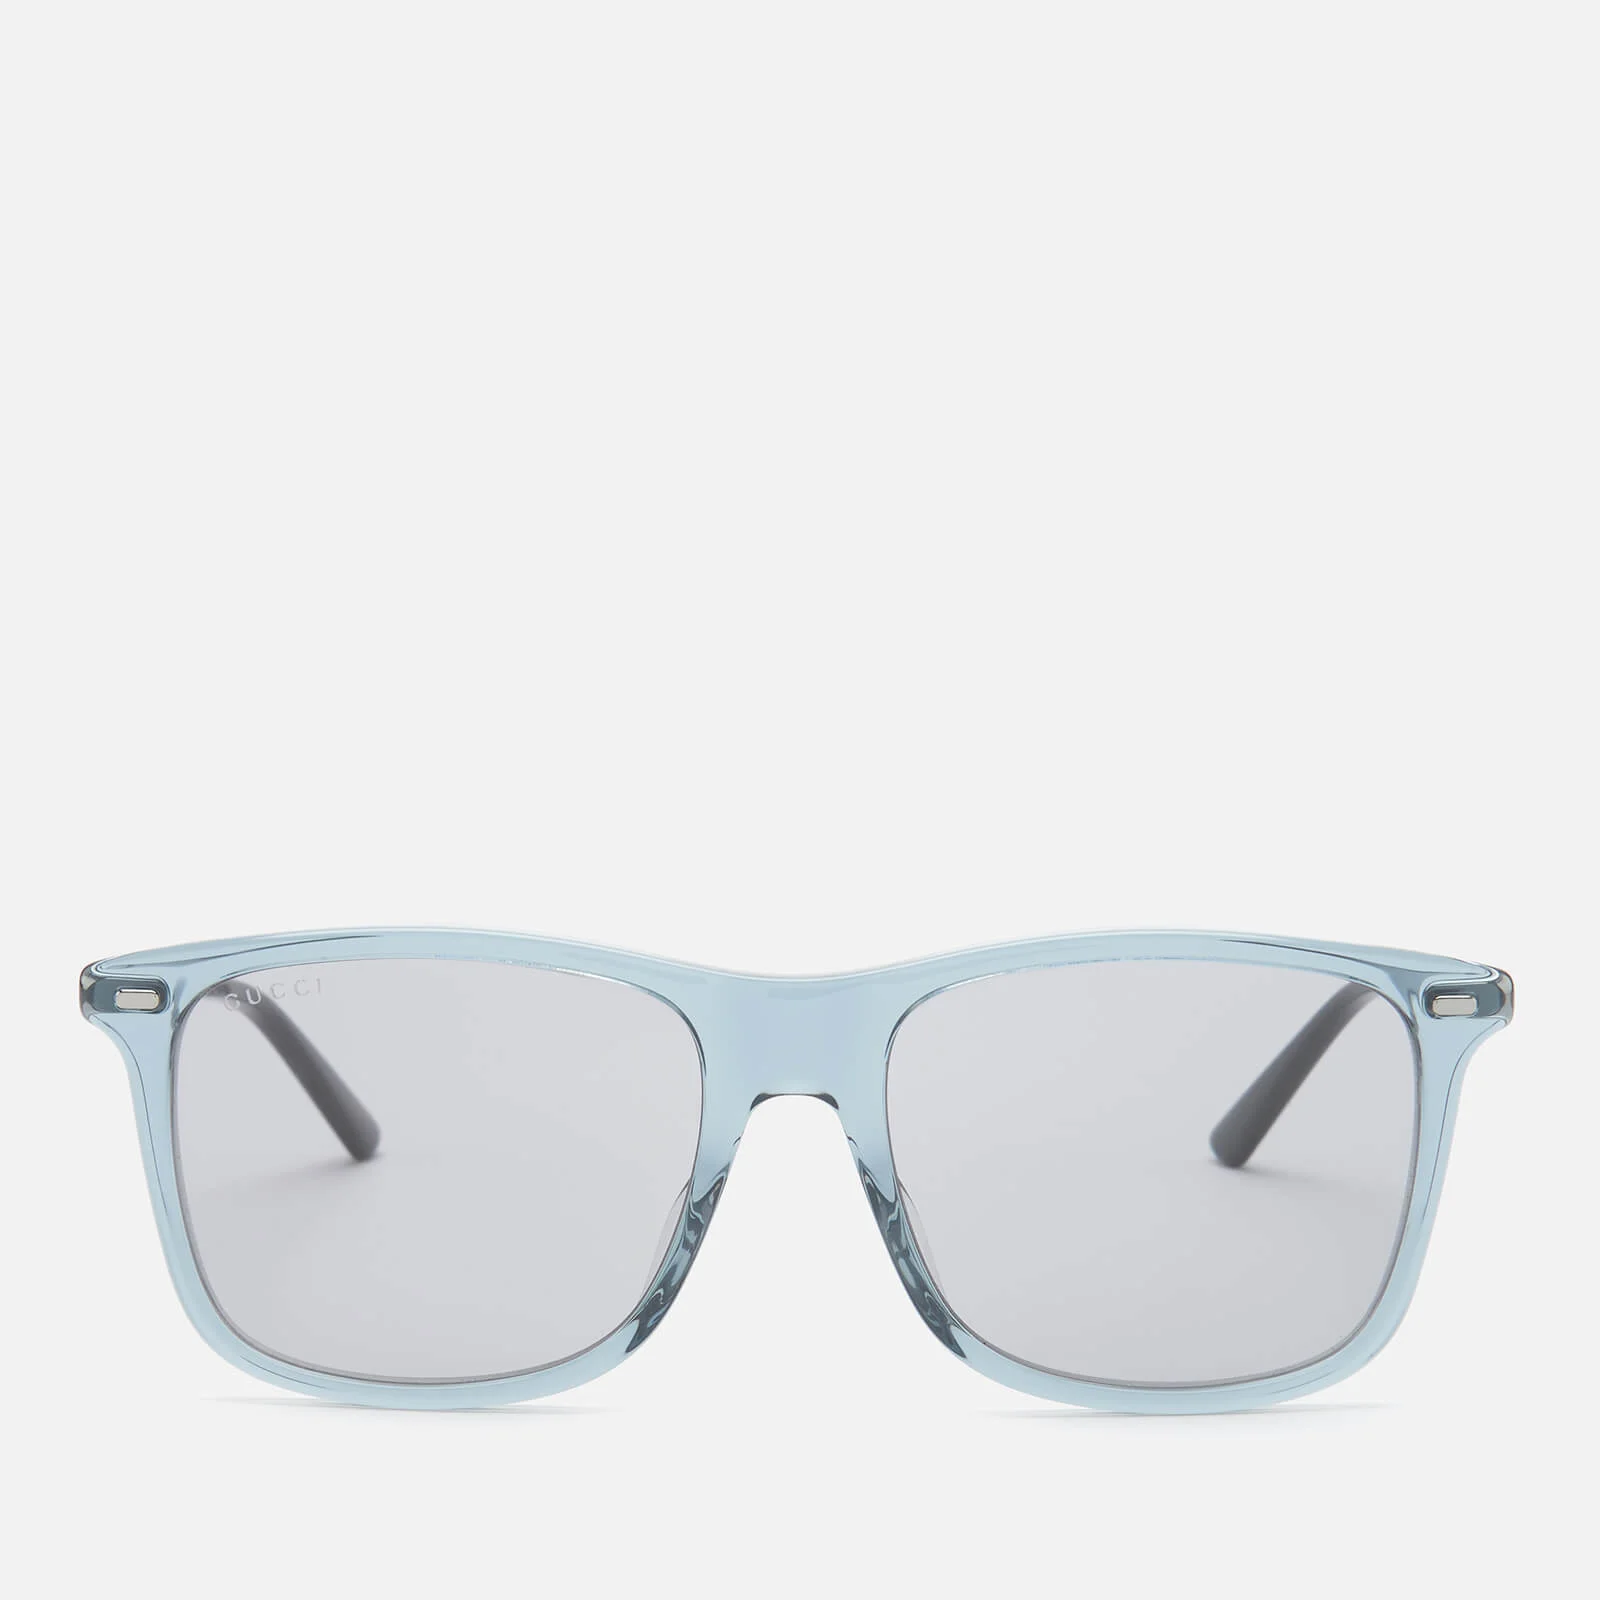 Gucci Men's Cylindrical Web Square Frame Sunglasses - Grey/Ruthenium/Grey Image 1